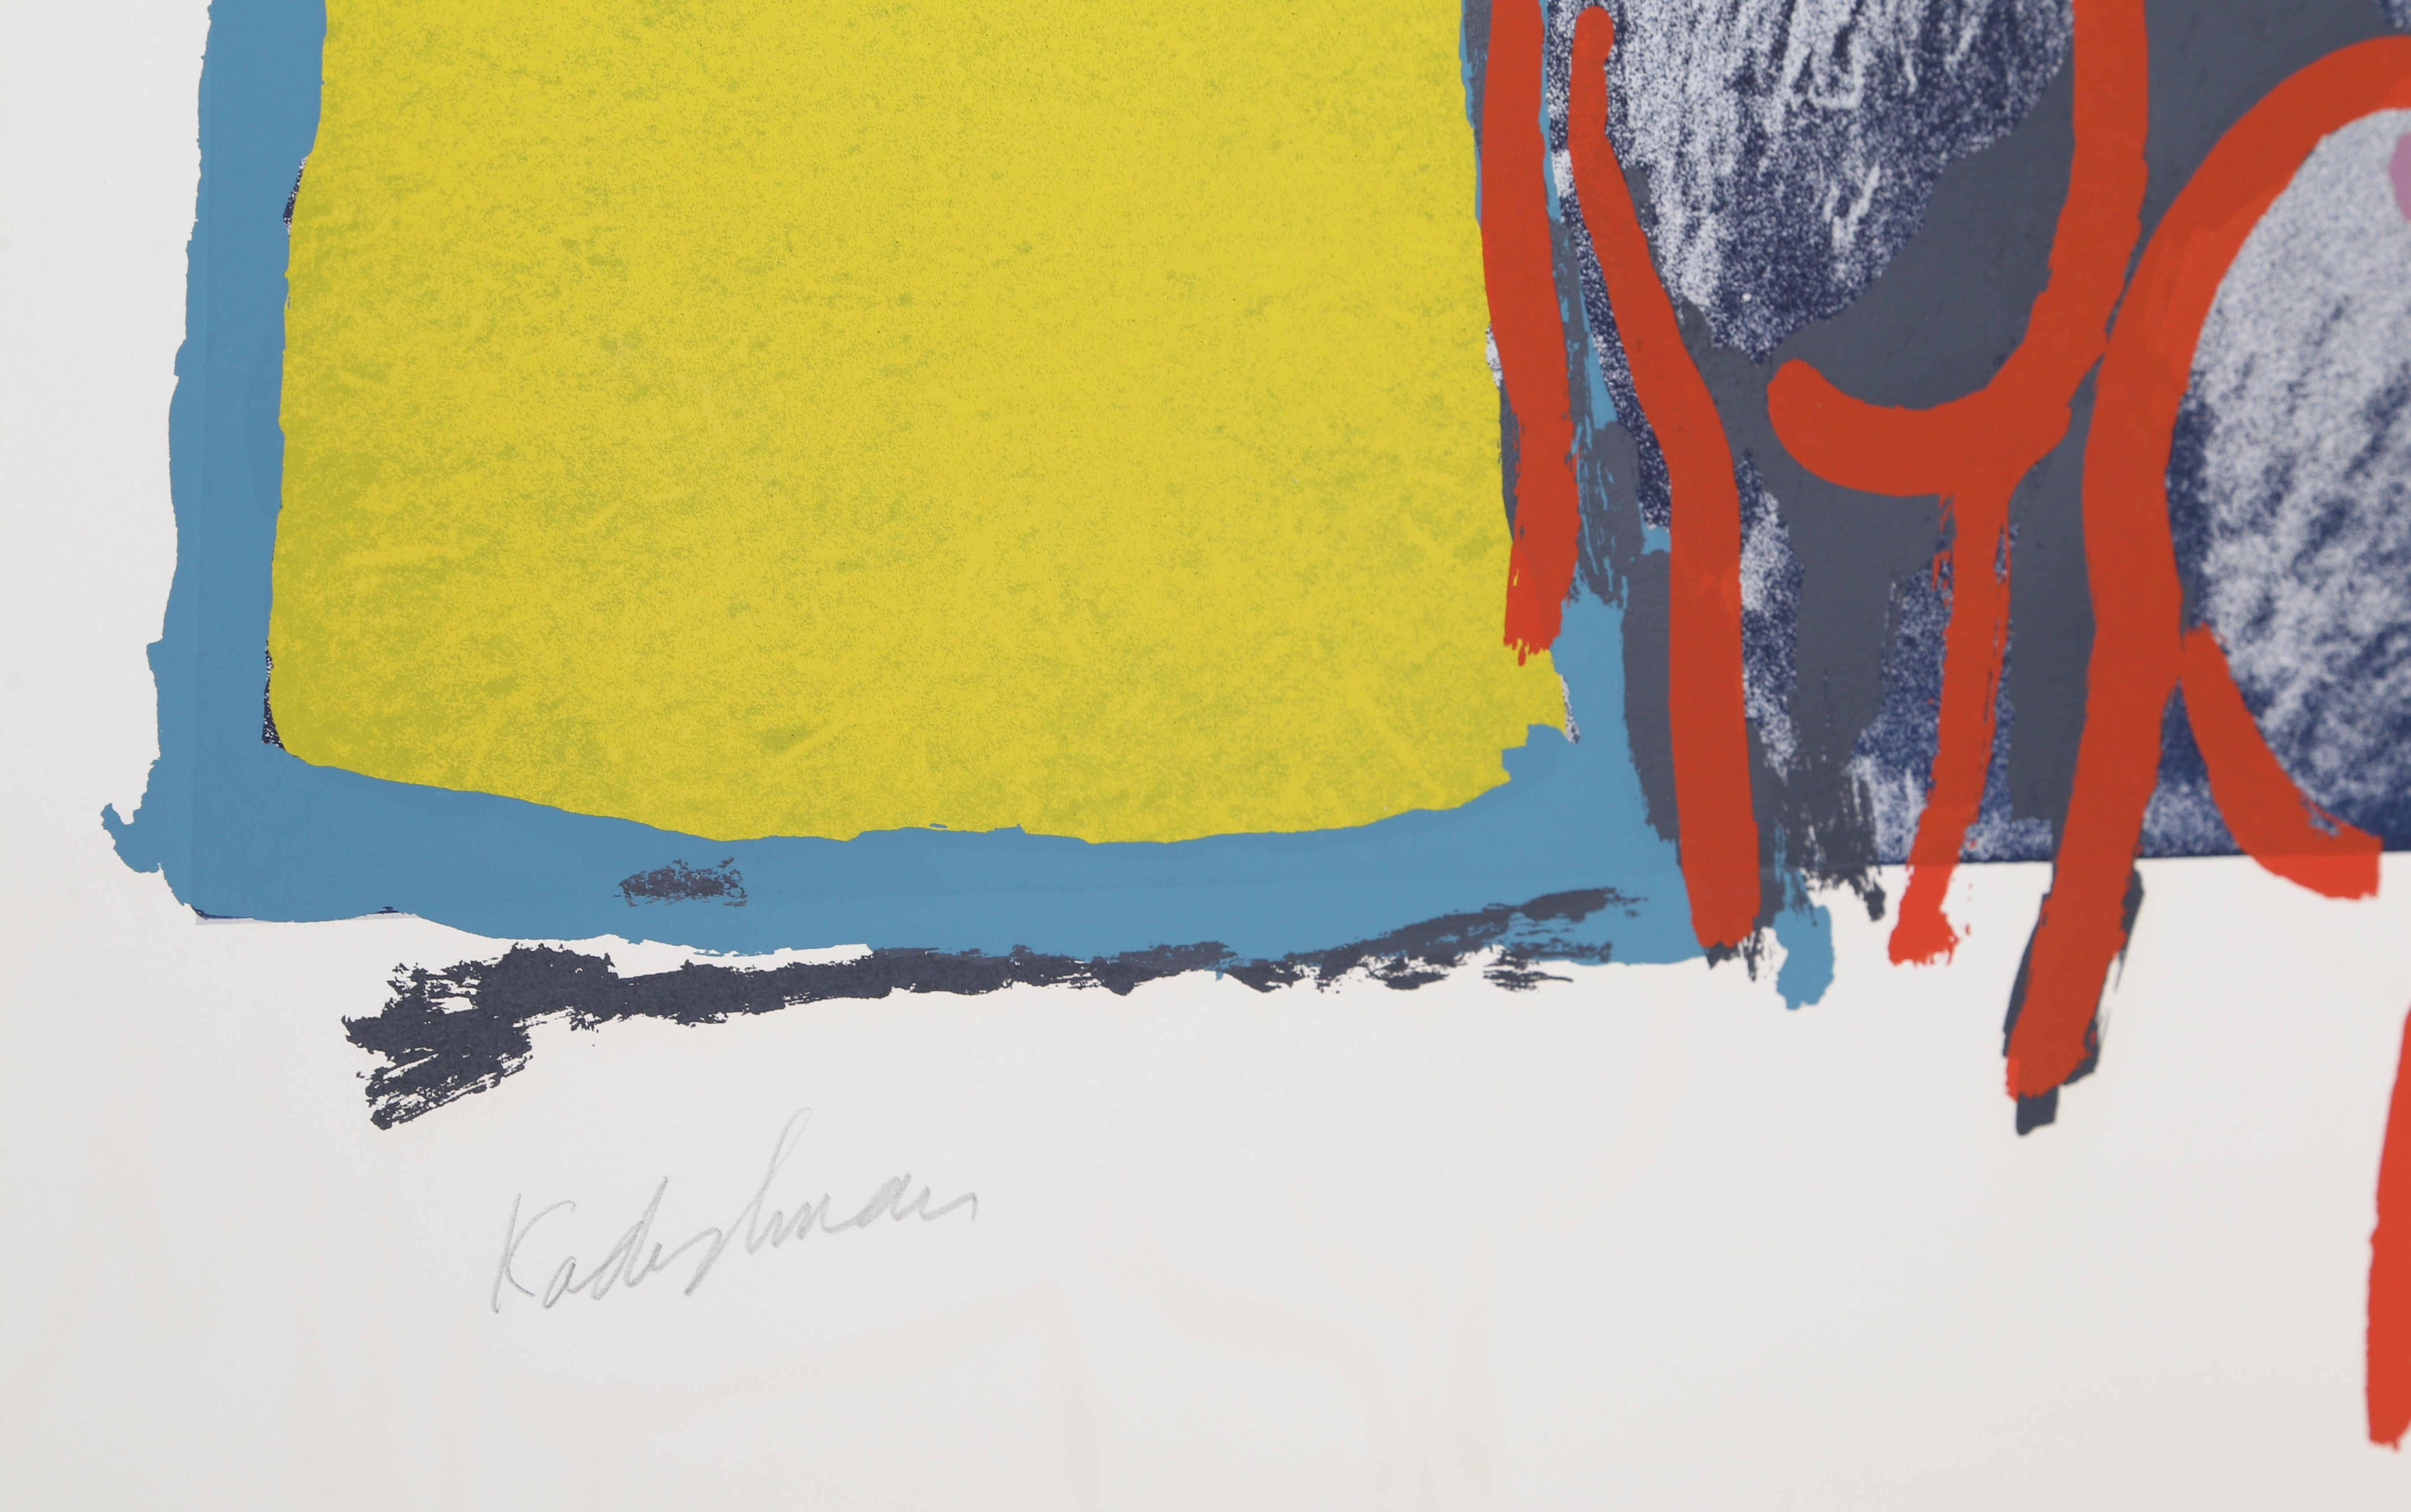 Artist:  Menashe Kadishman, Israeli (1932 - 2015)
Title:	Sheep Portfolio 1
Year:	1981
Medium: Serigraph and Etching, signed in pencil
Edition: 65, AP 5
Size: 33.5 x 31 in. (85.09 x 78.74 cm)